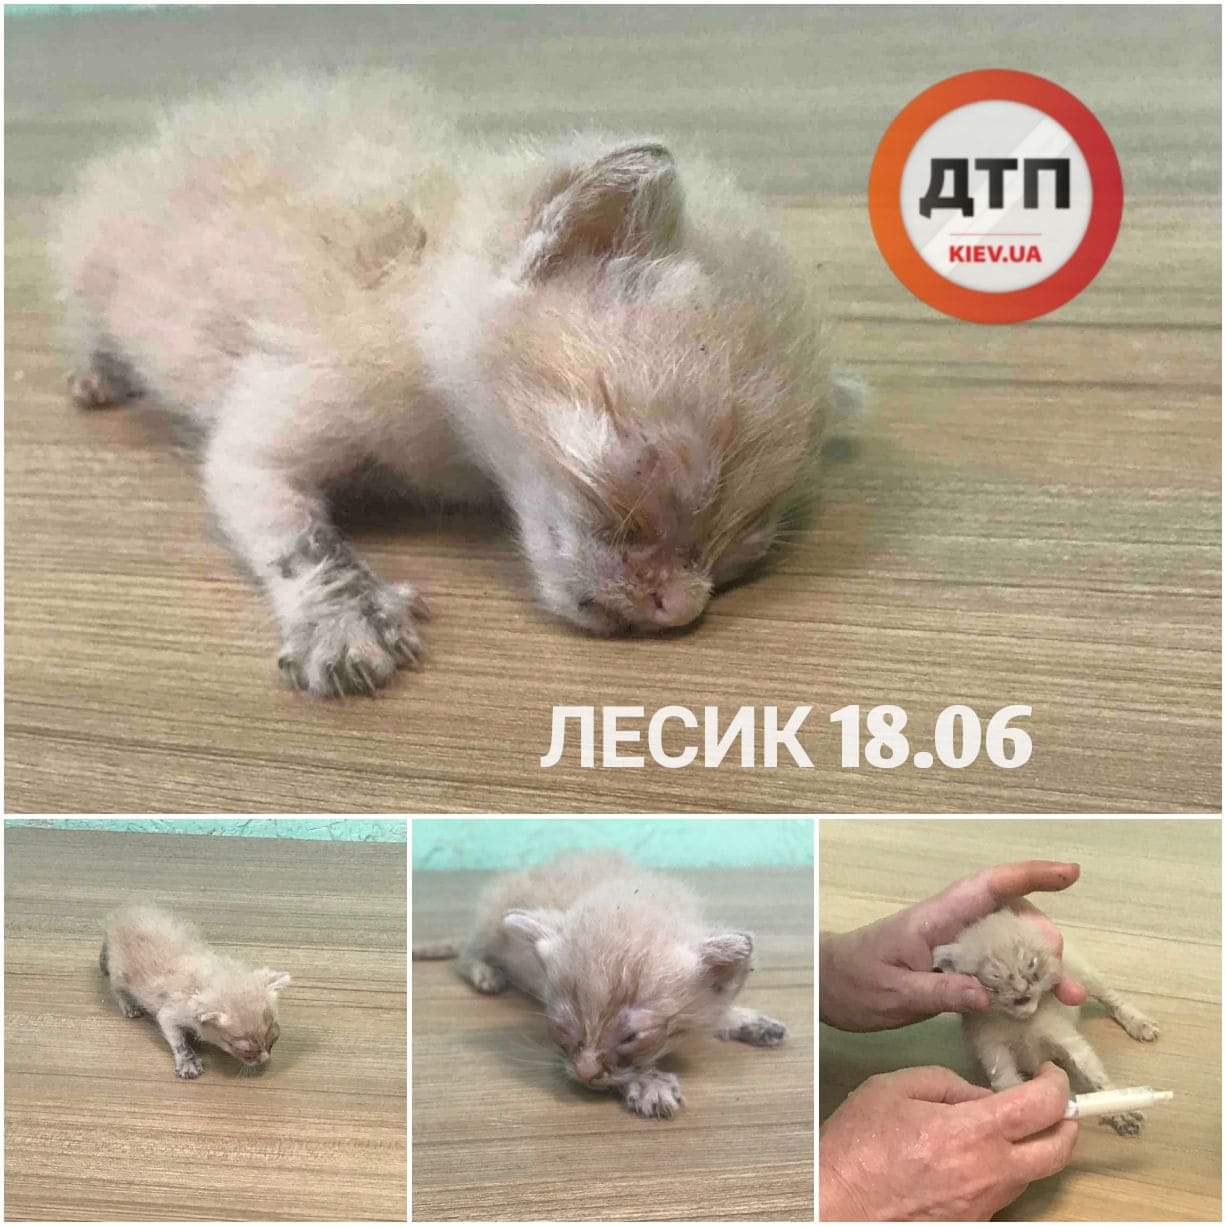 Умирающий котёнок Лесик доставлен в клинику: сбор средств на спасение